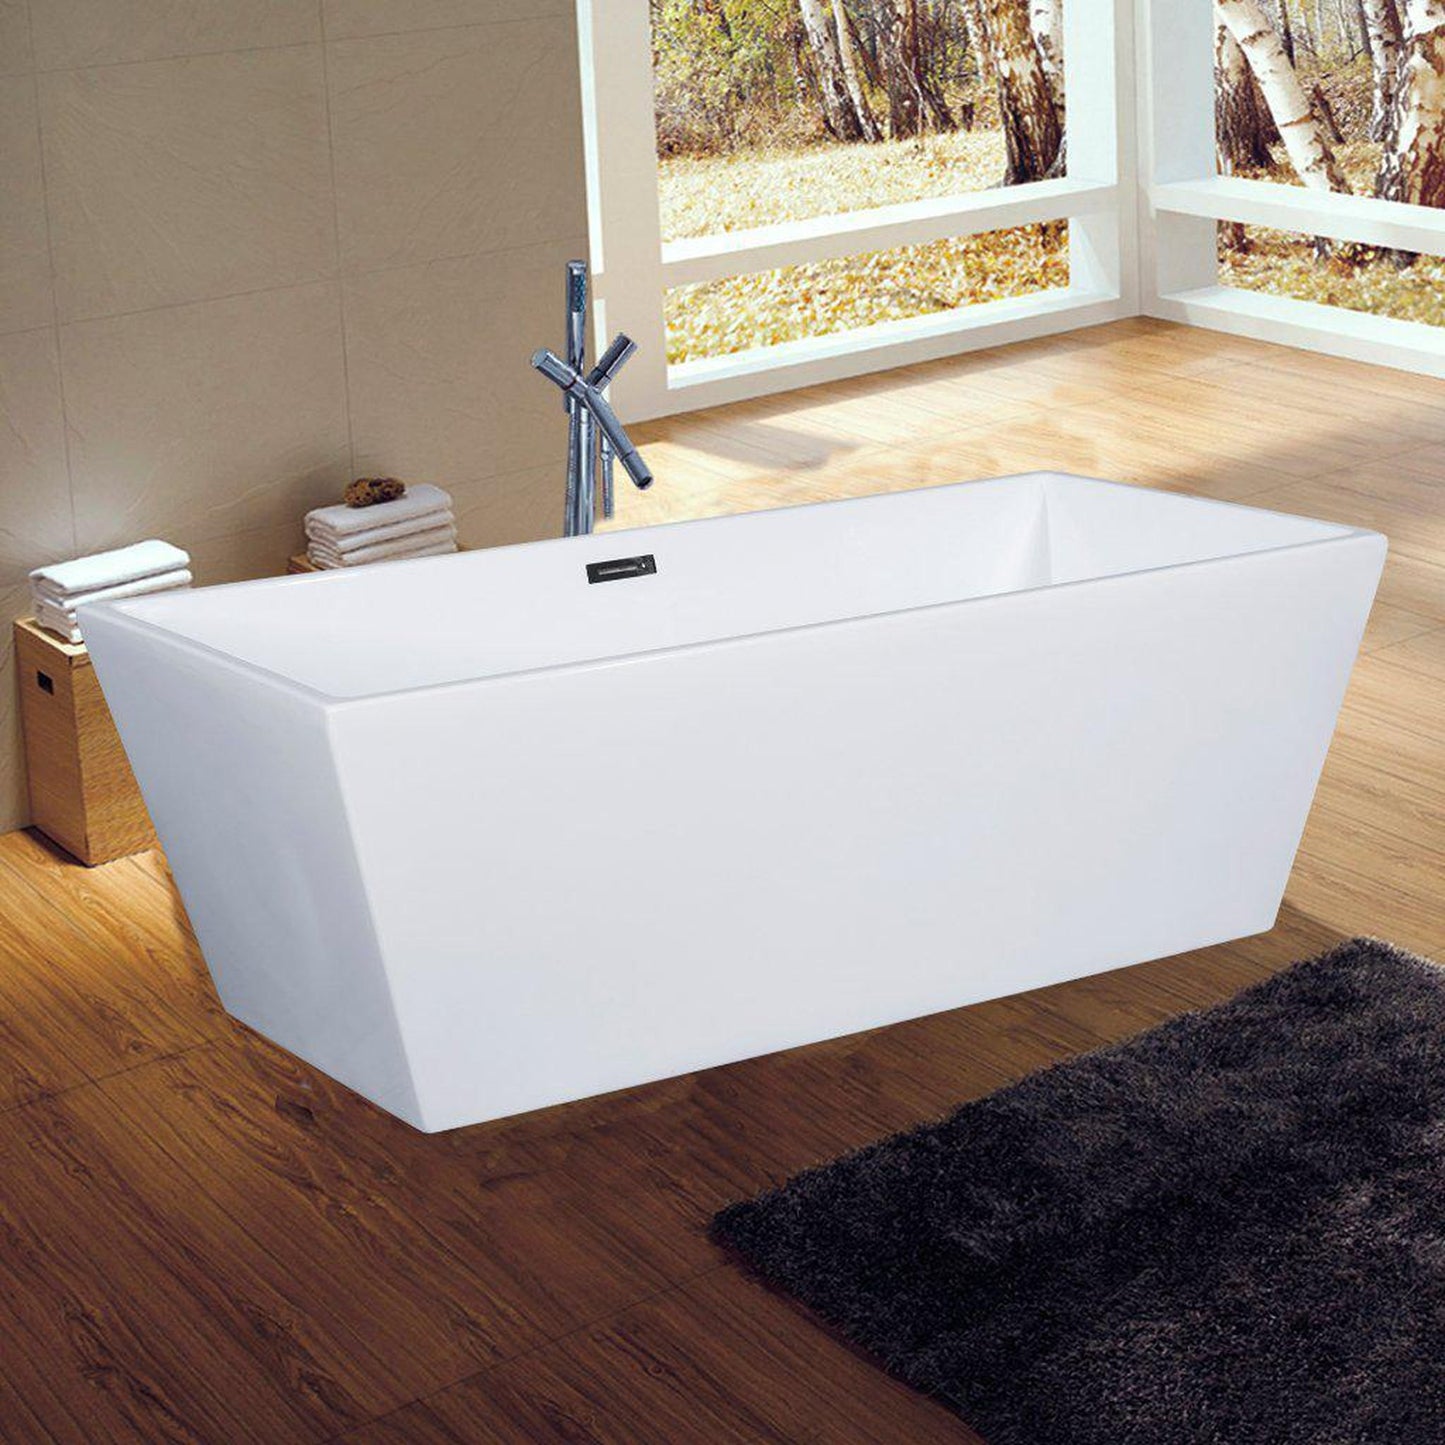 ALFI Brand AB8833 59" One Person Freestanding White Rectangle Acrylic Soaking Bathtub